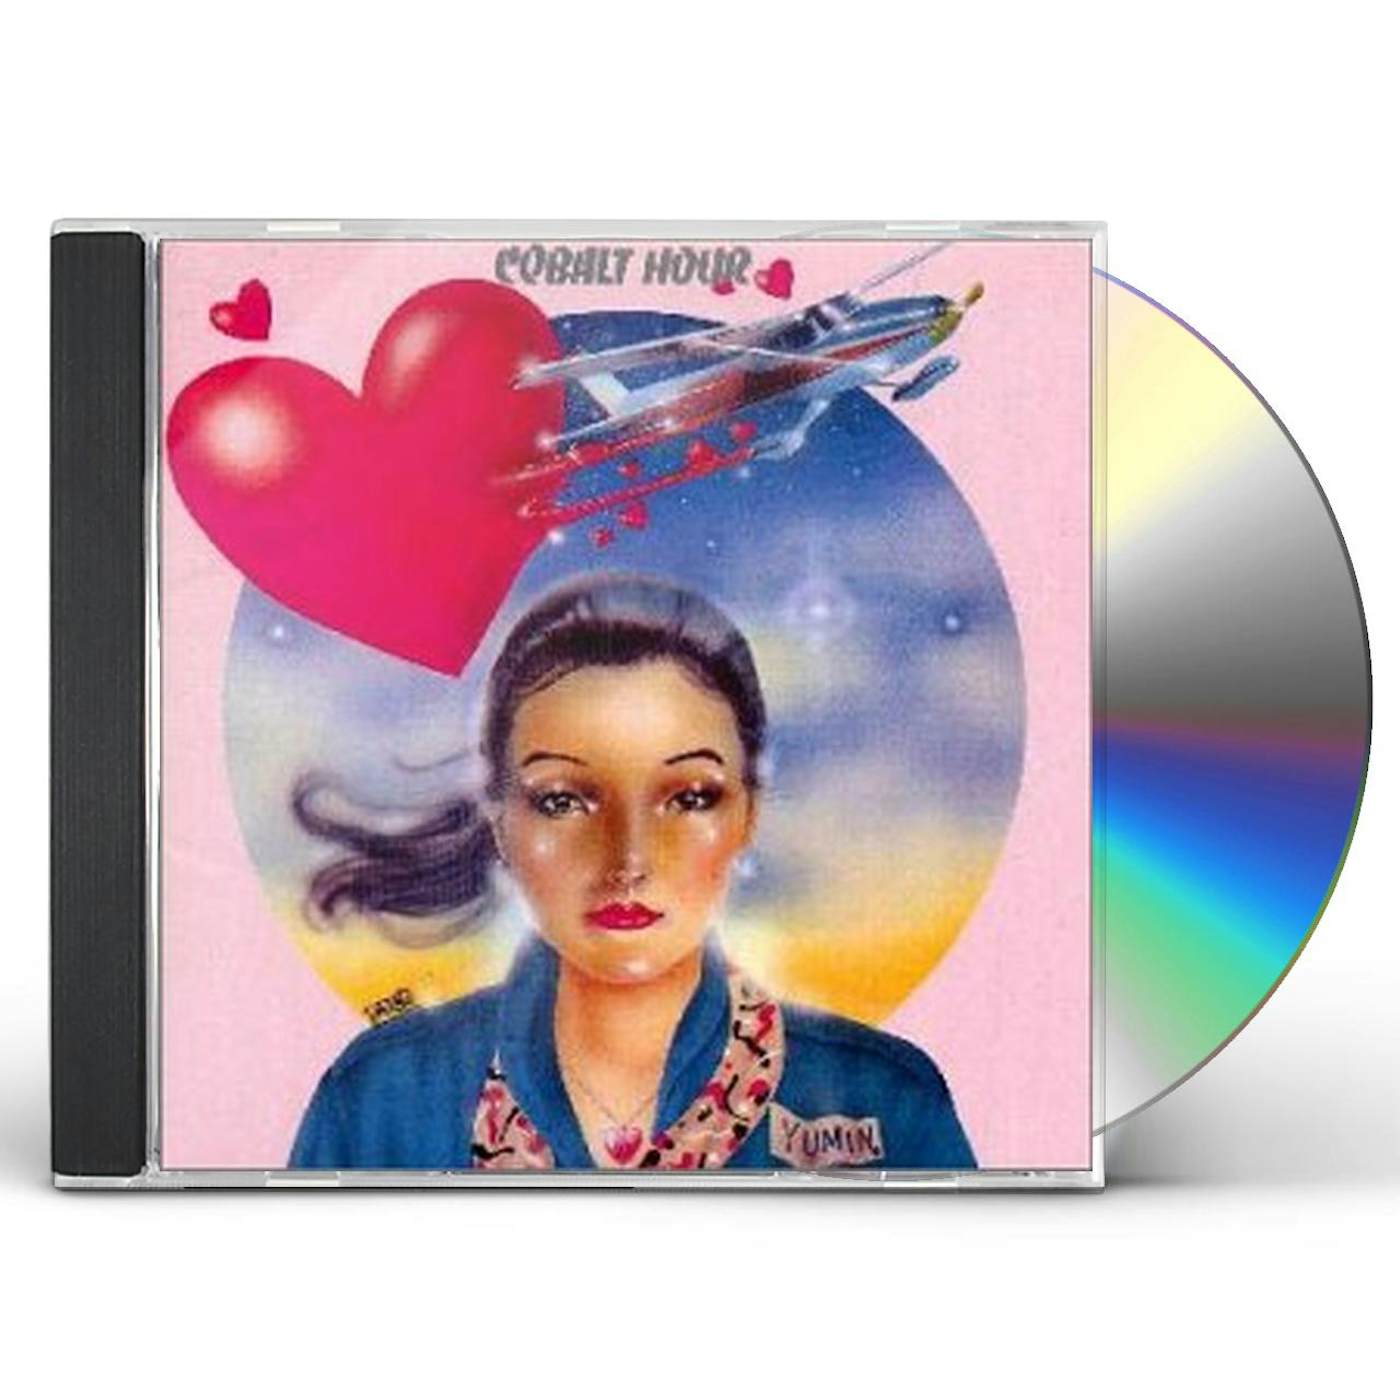 Yumi Arai COBALT HOUR CD